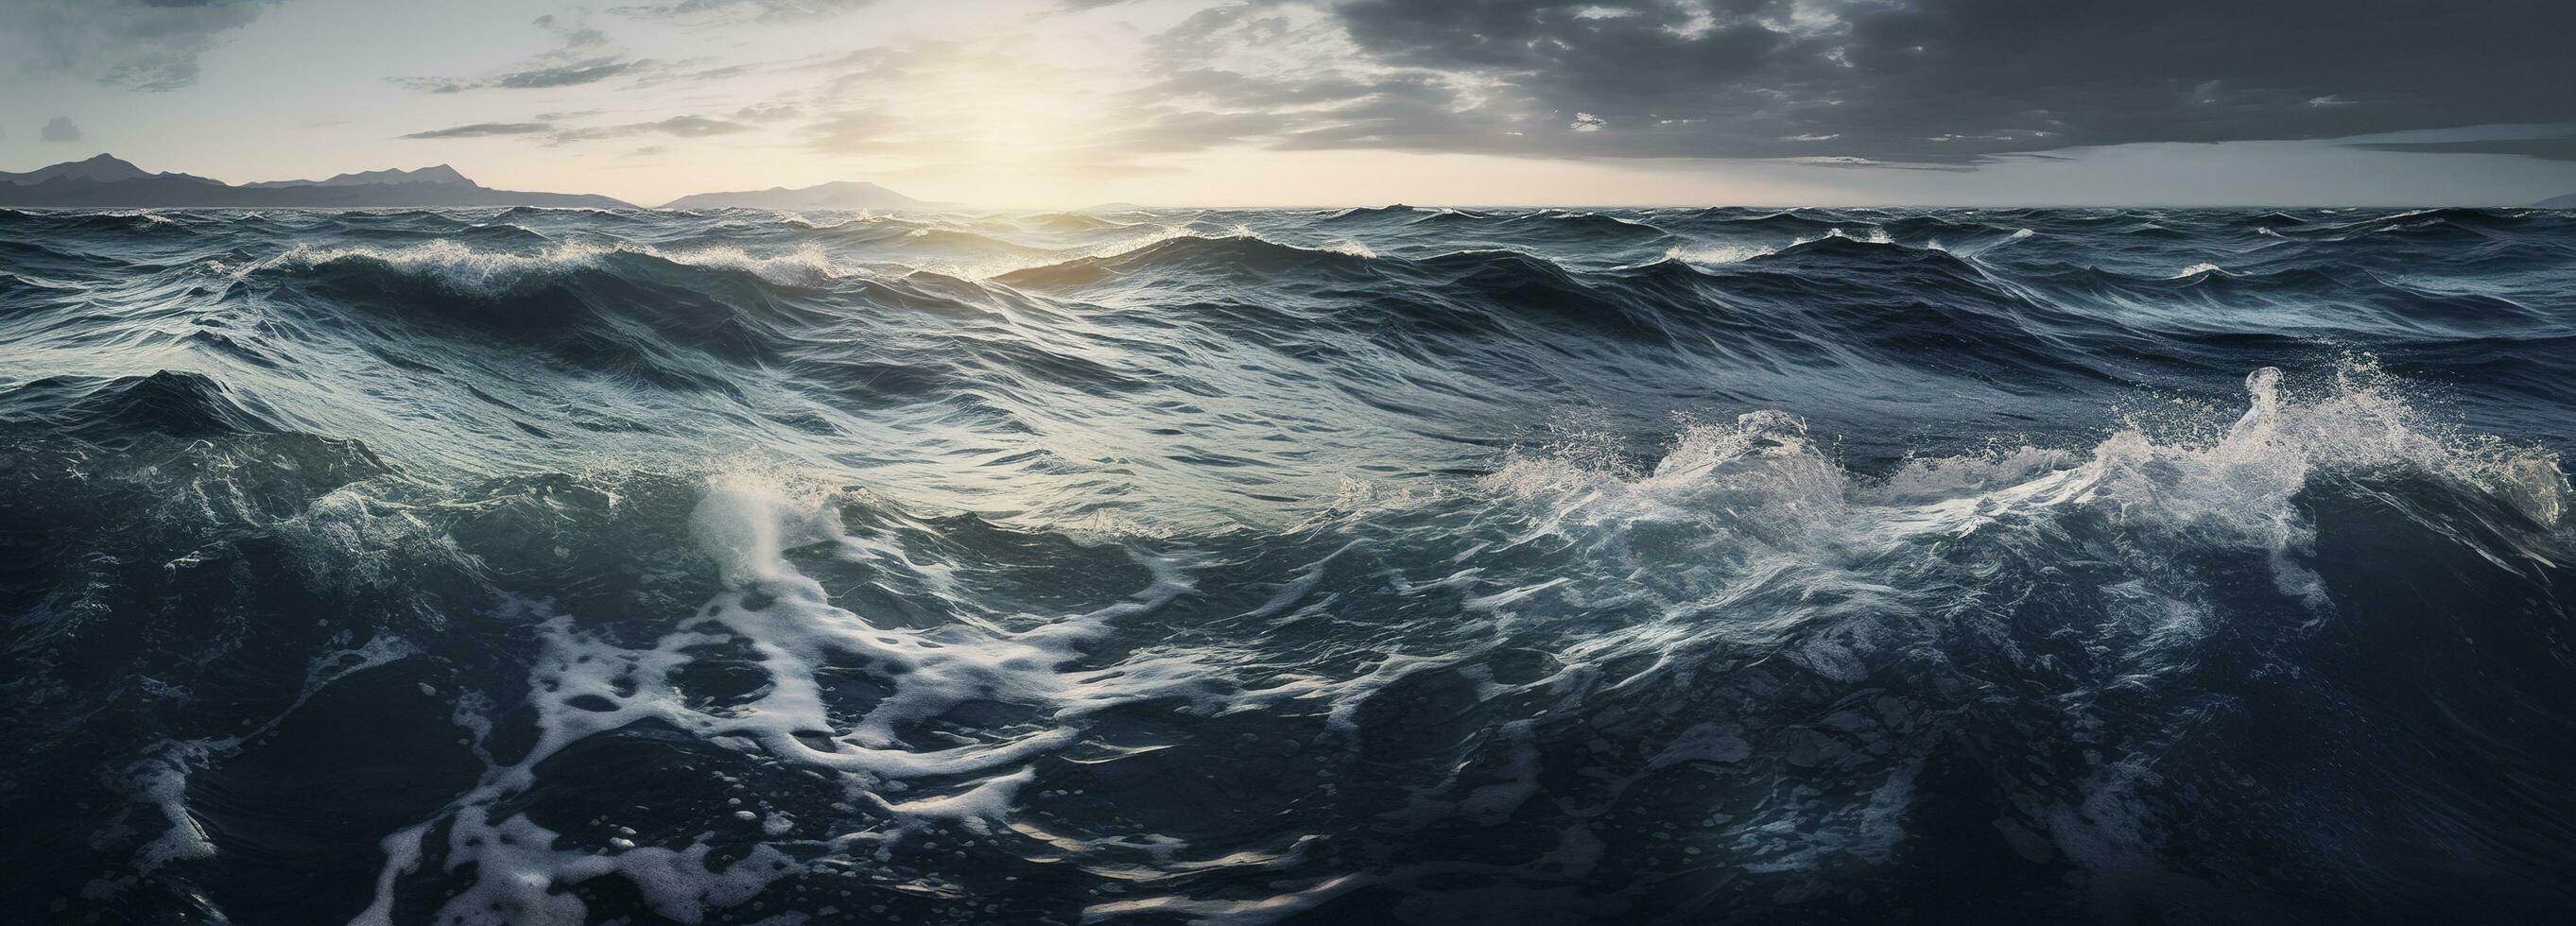 Spectacular abstract scene of an ocean tidal wave digital art 3d illustration photo